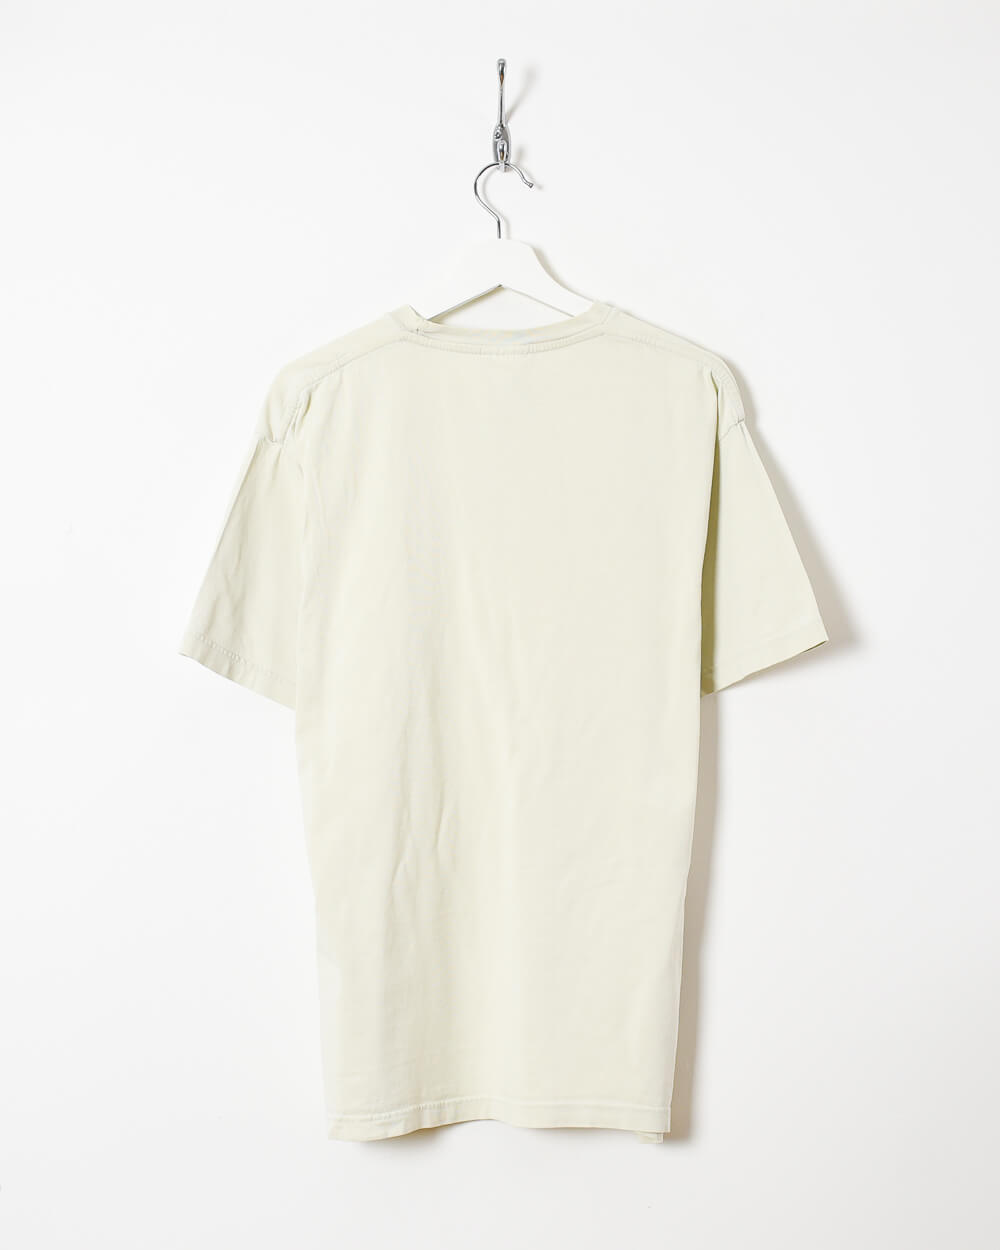 Neutral Nike Athletic T-Shirt - X-Large